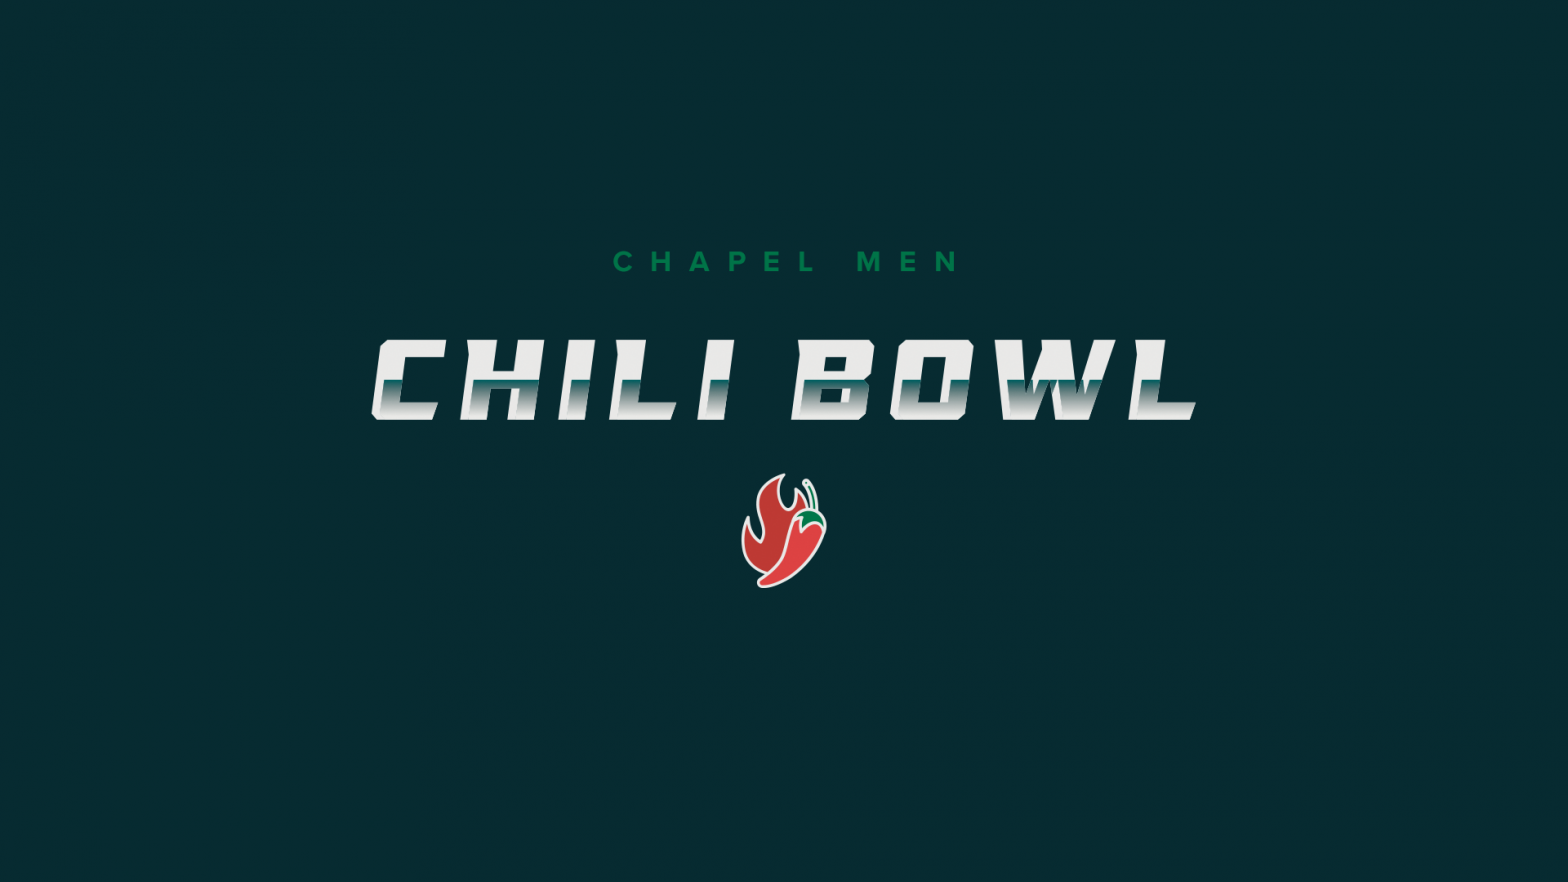 Chapel Men’s Chili Bowl